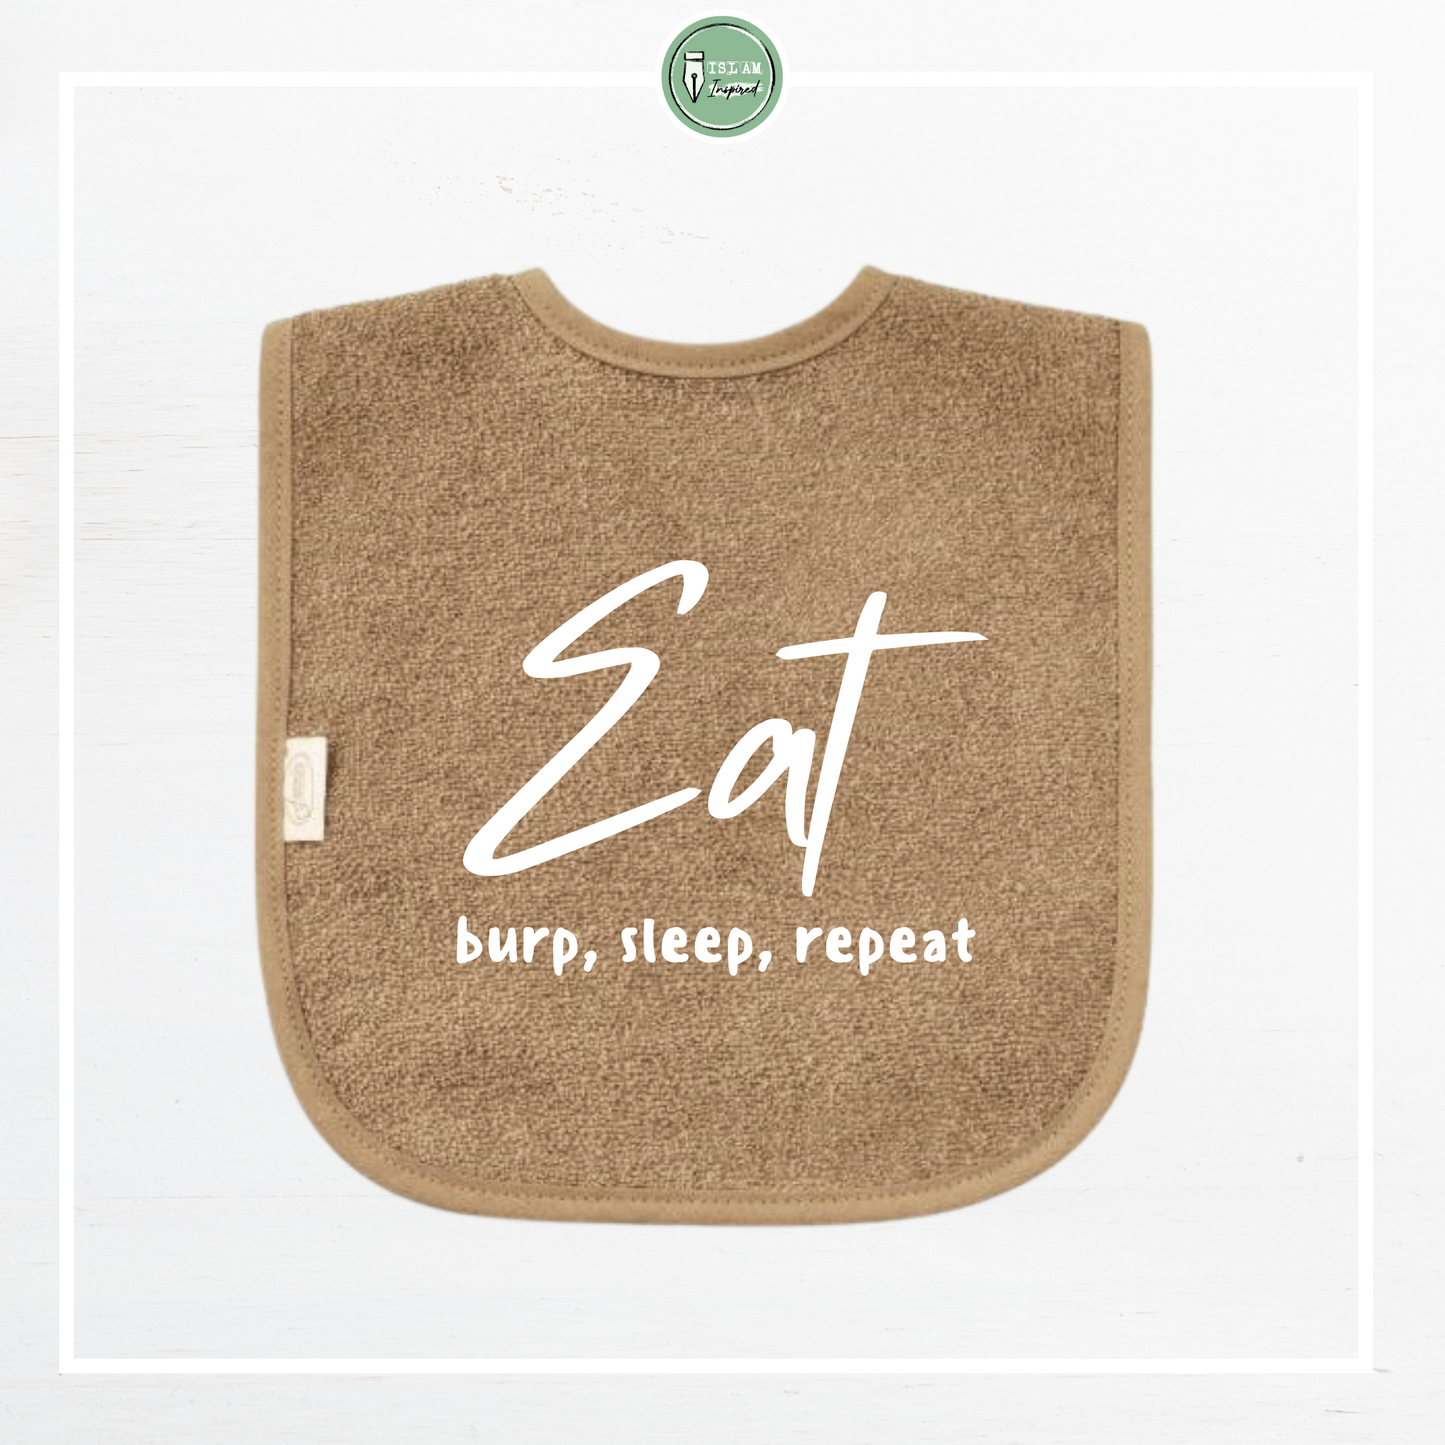 Slabbetje 'Eat, burp, sleep, repeat'